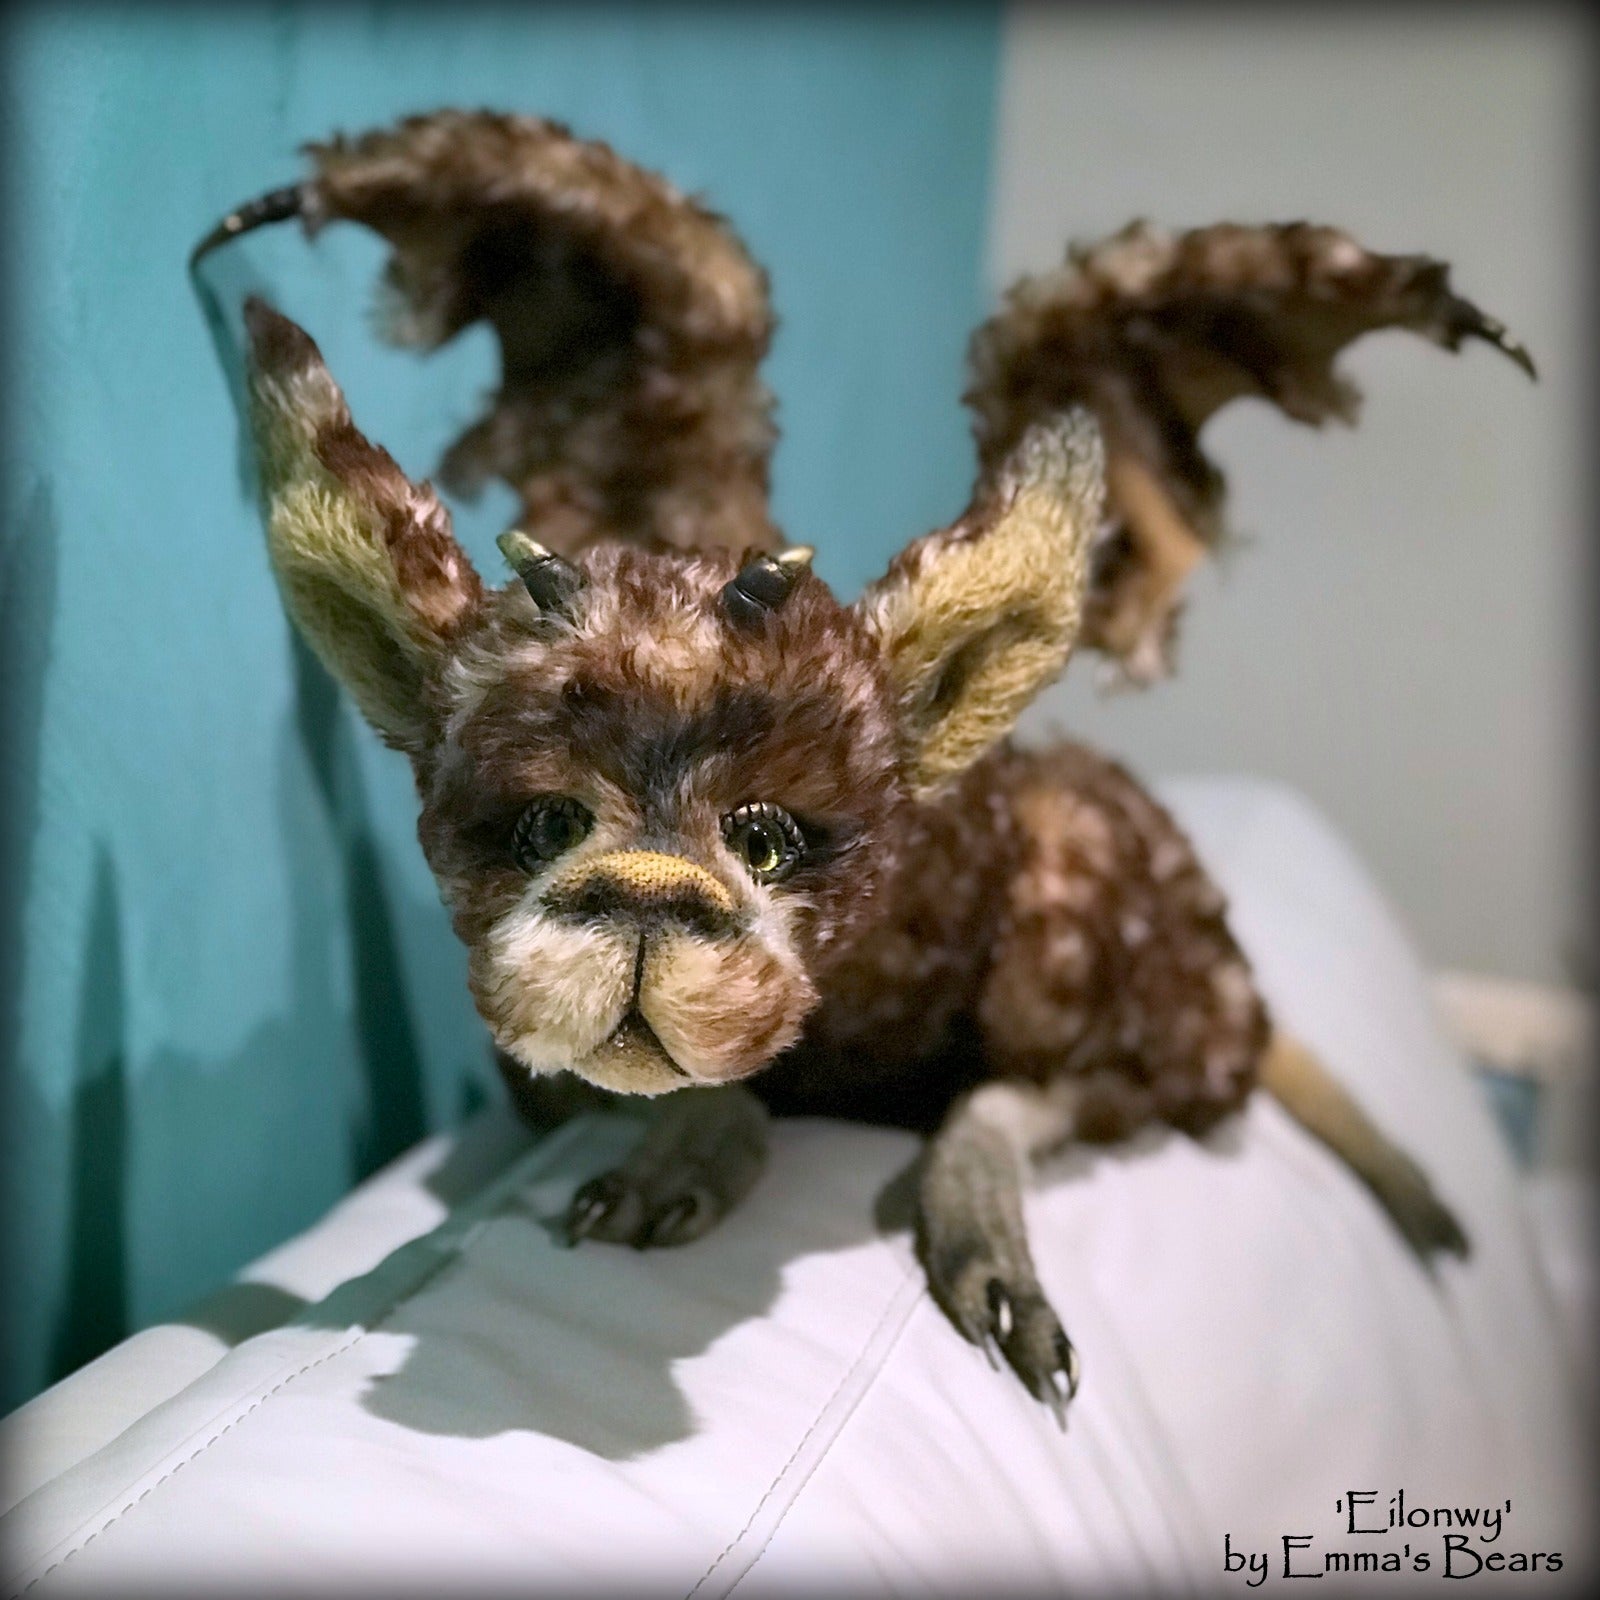 Eilonwy Dragon - 40" mohair dragon soft sculpture - OOAK by Emma's Bears